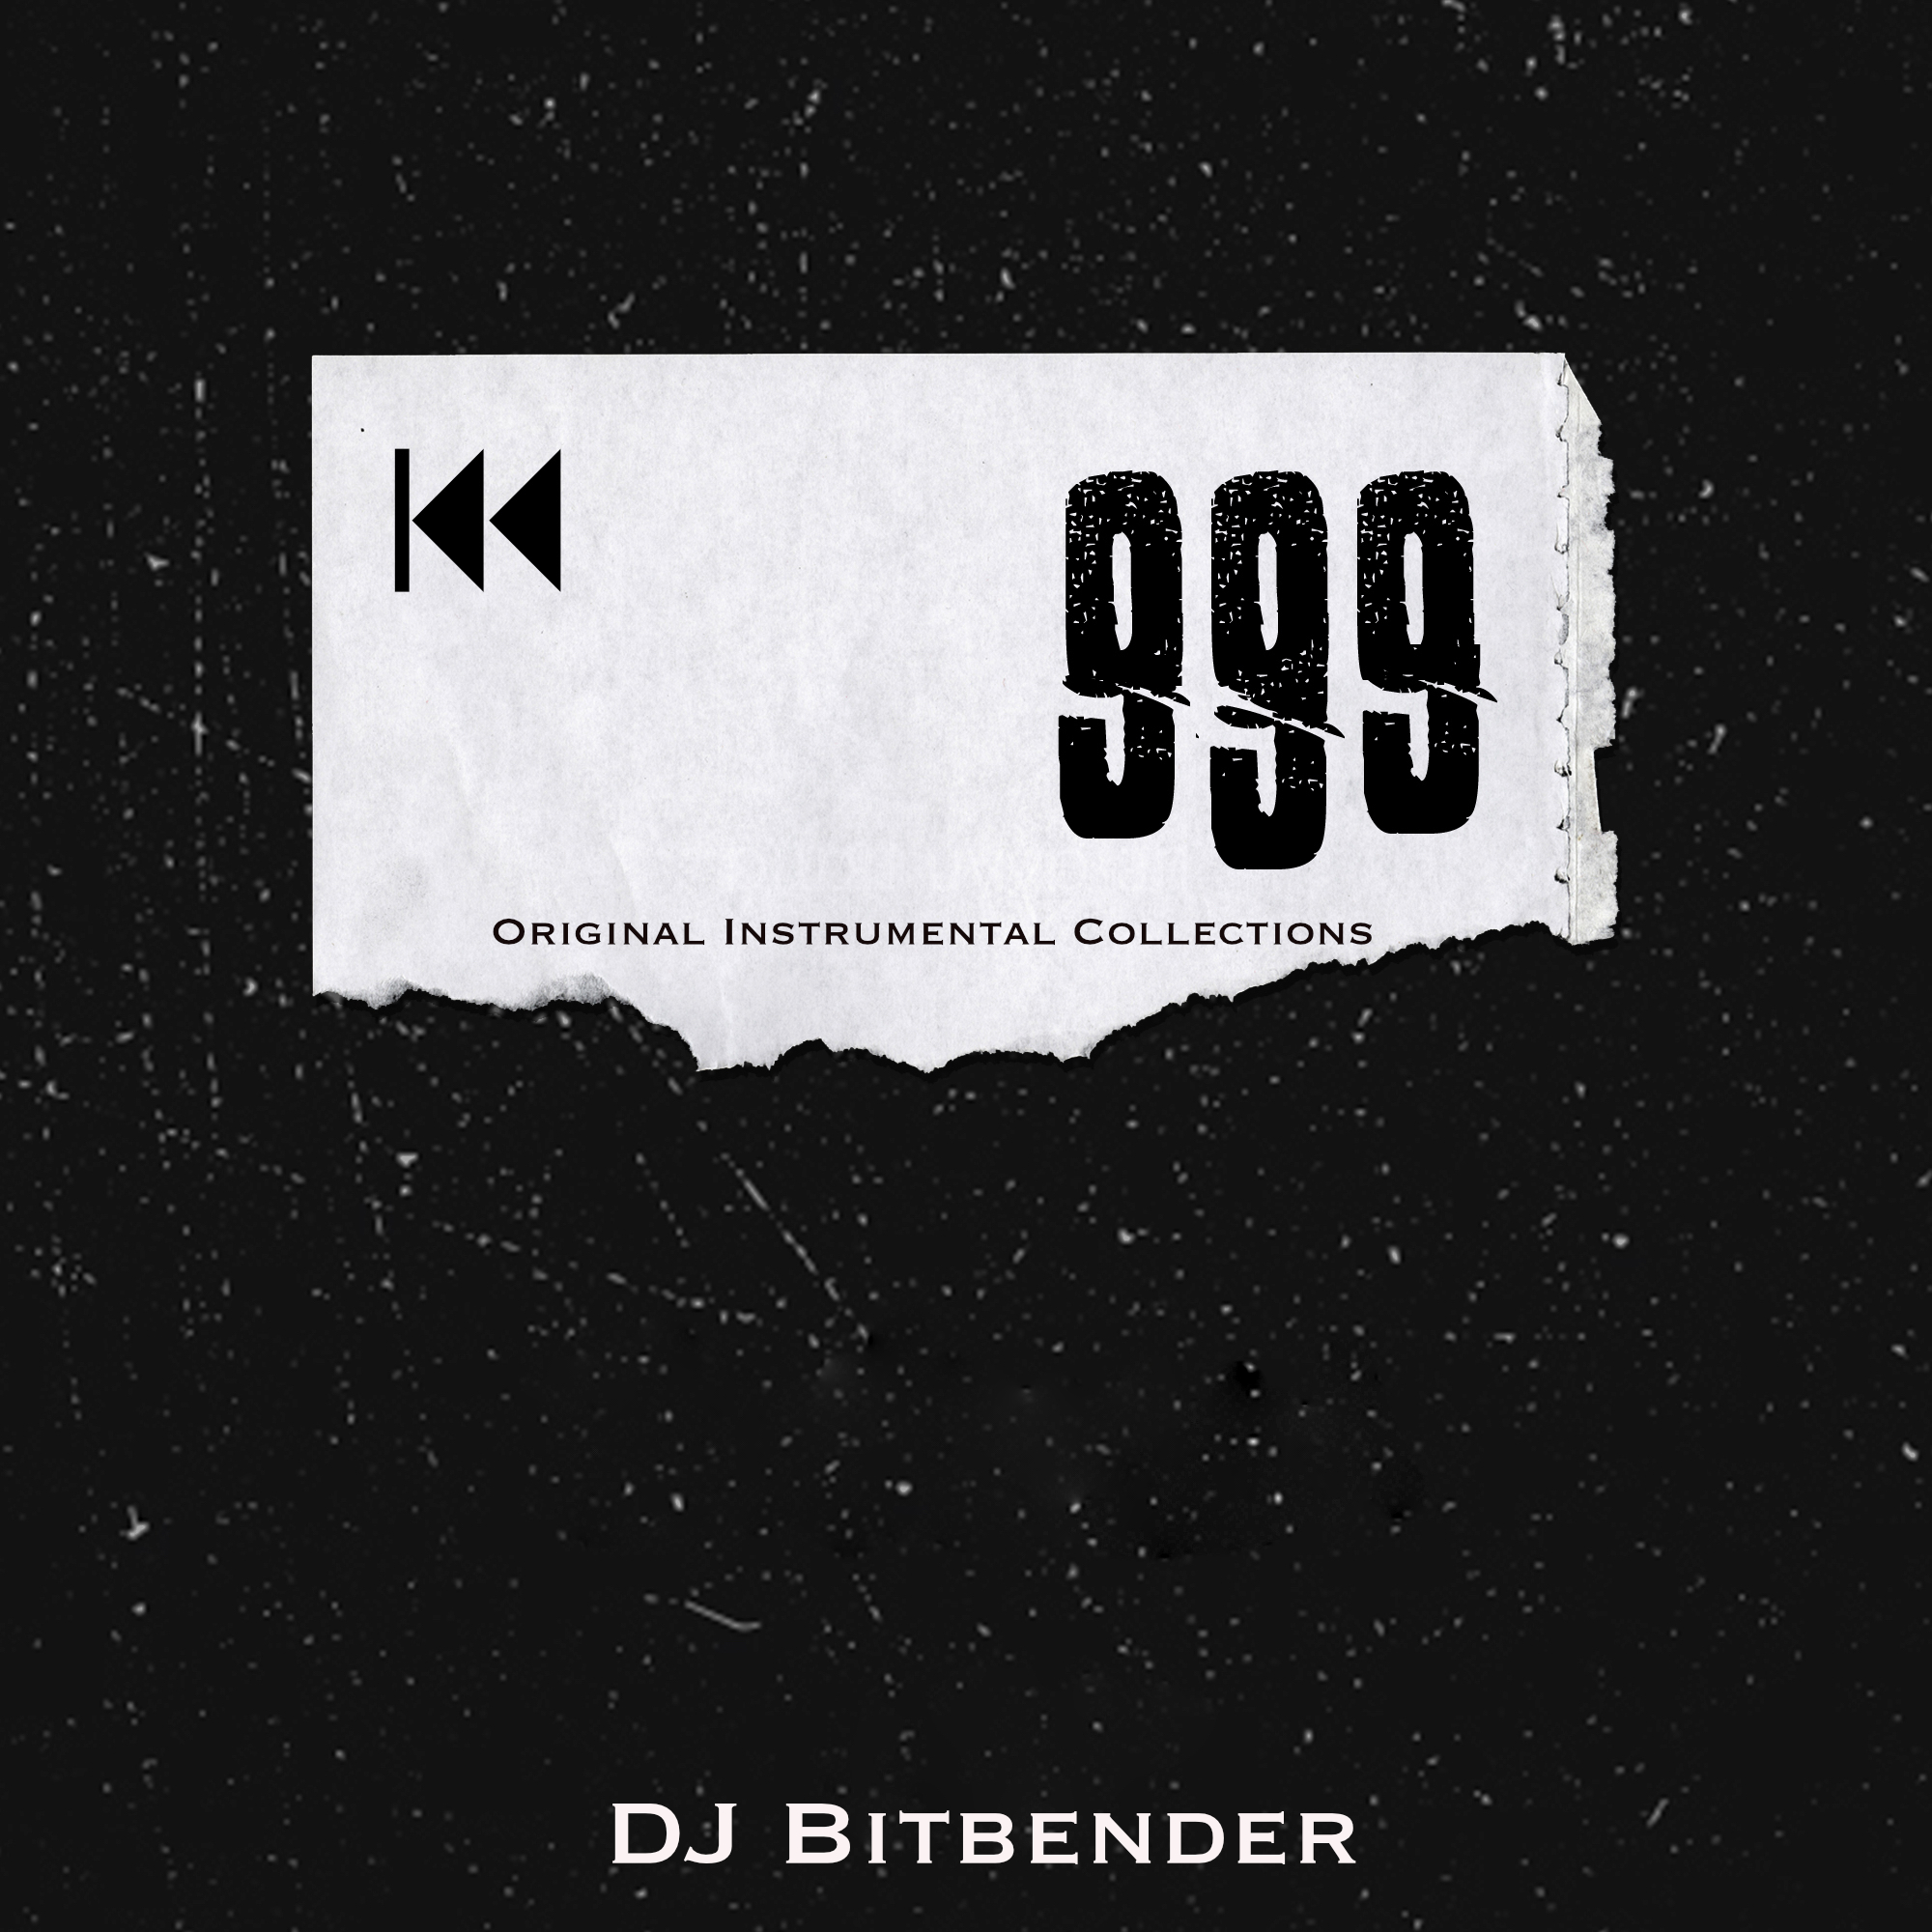 TMAQTALK BEAT: DJ BITBENDER - 999 Original Instrumental Collections